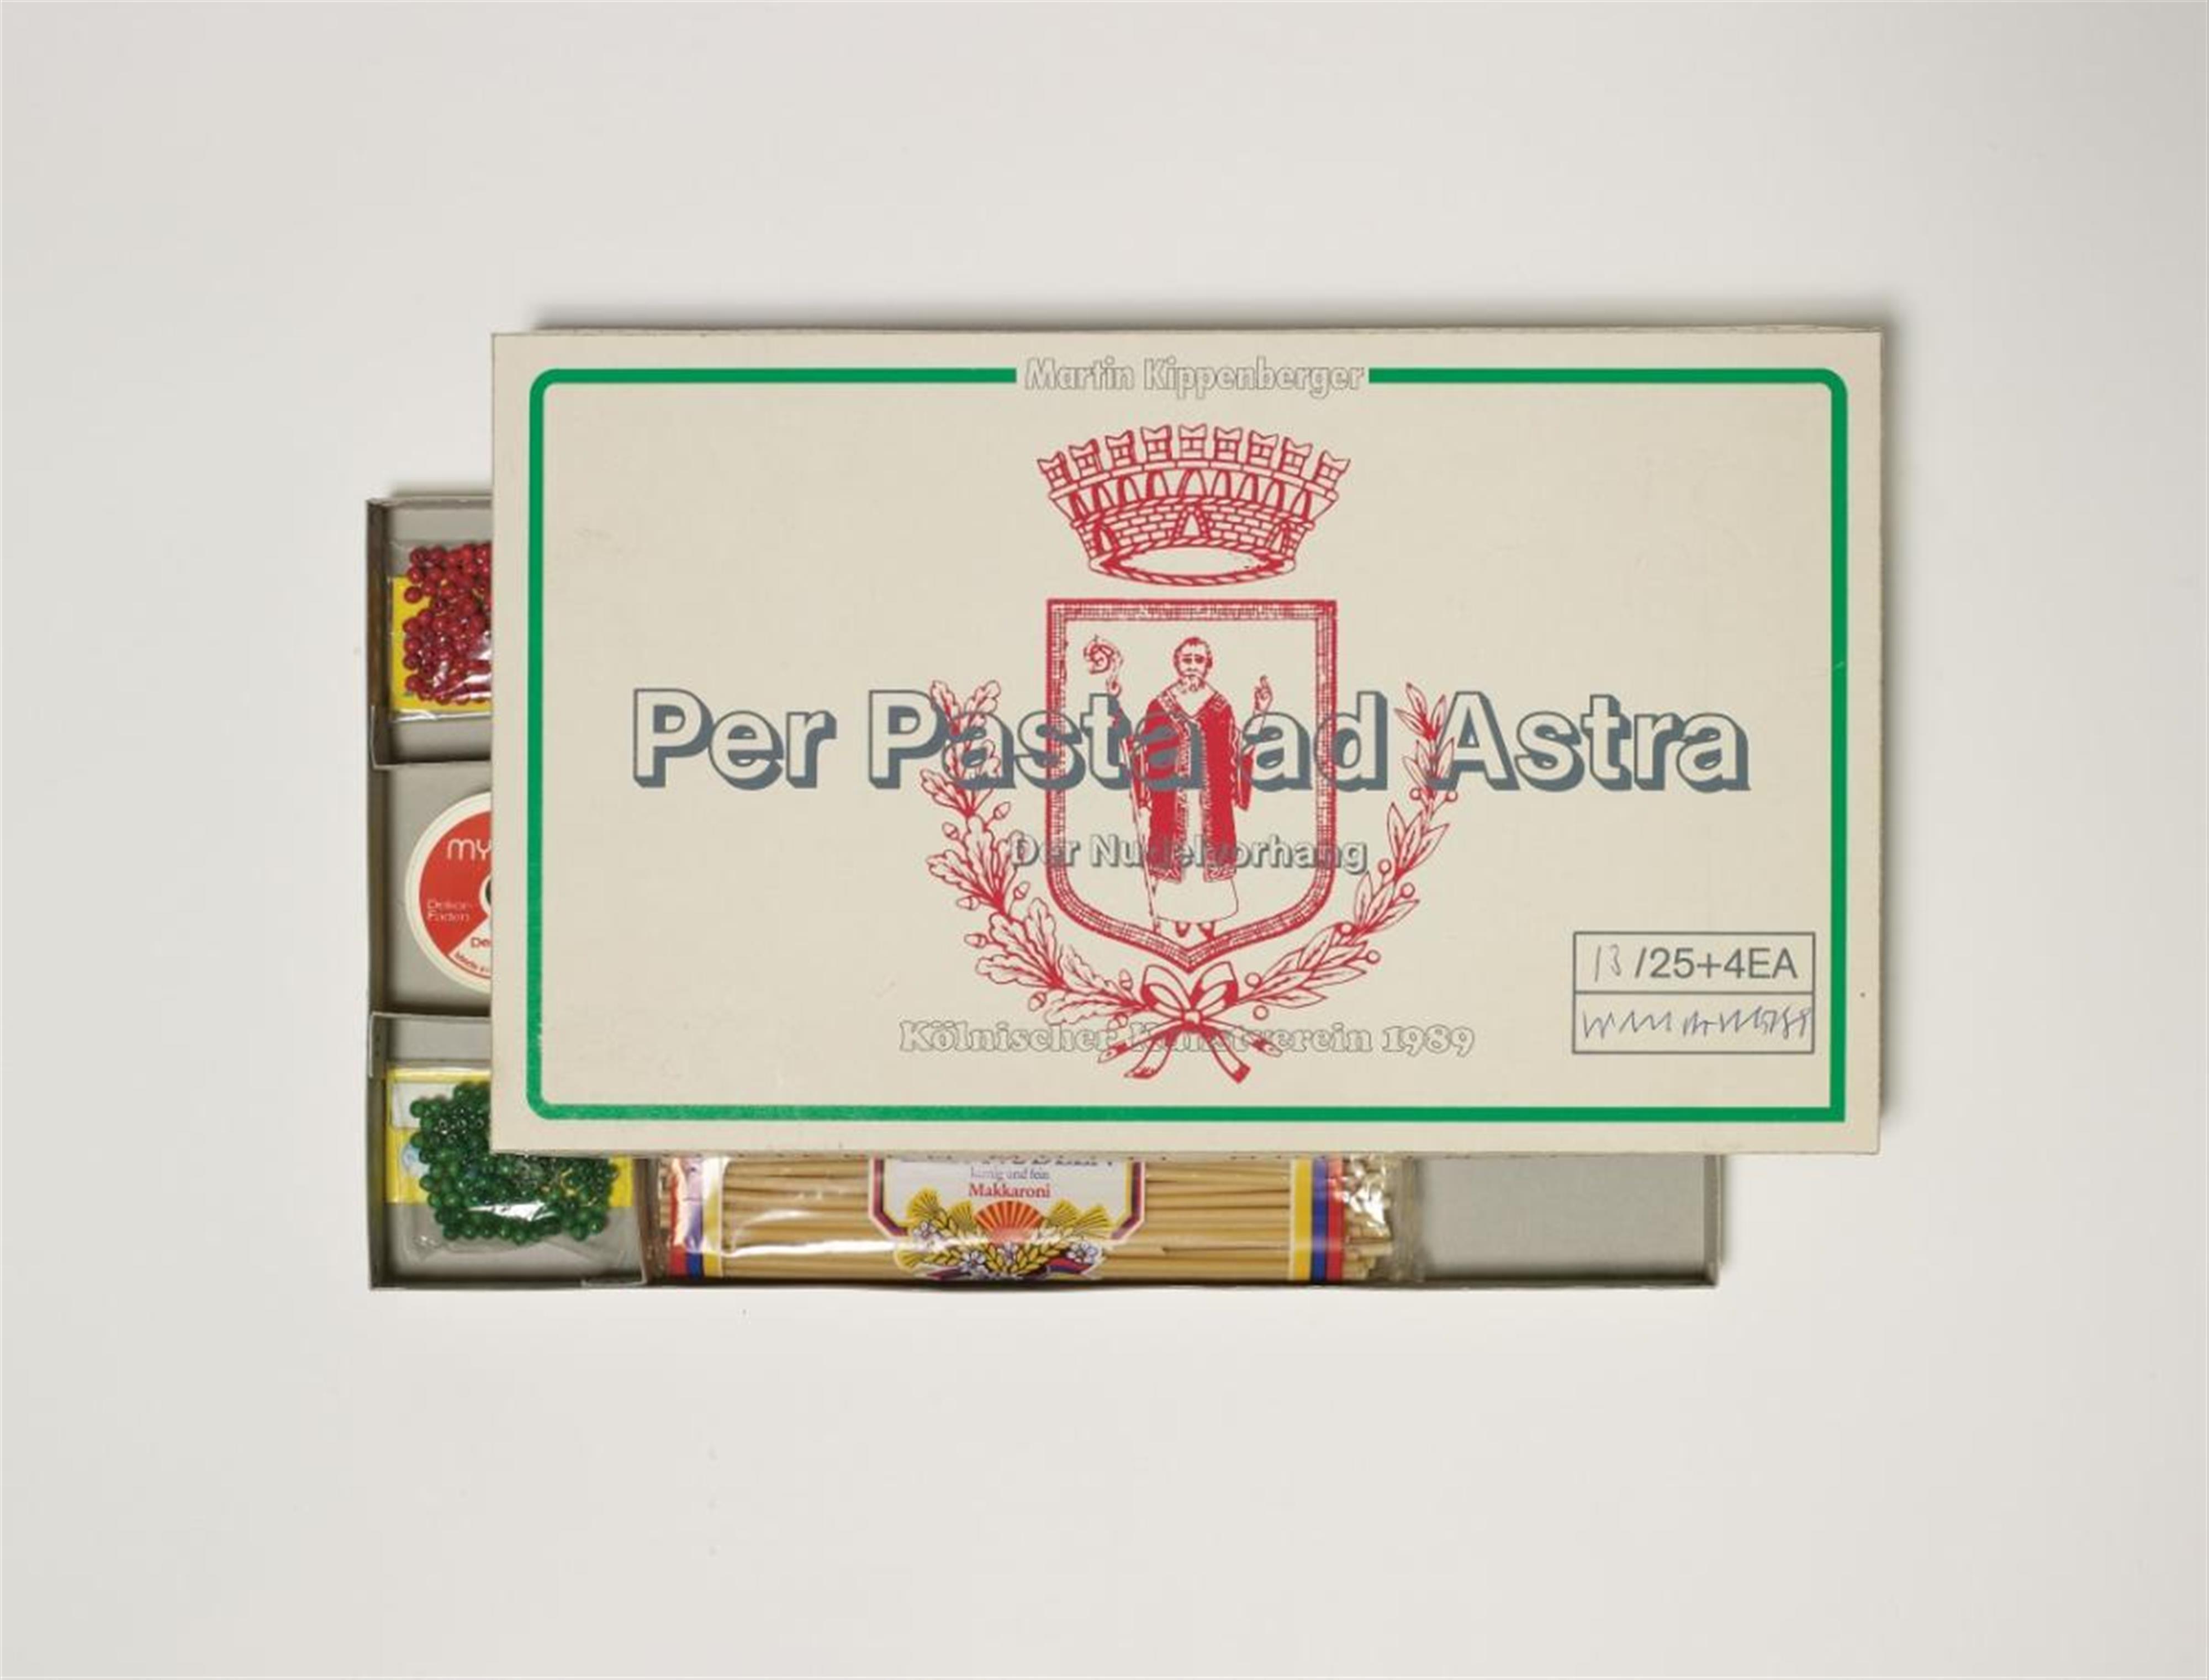 Martin Kippenberger - Per Pasta ad Astra - image-1